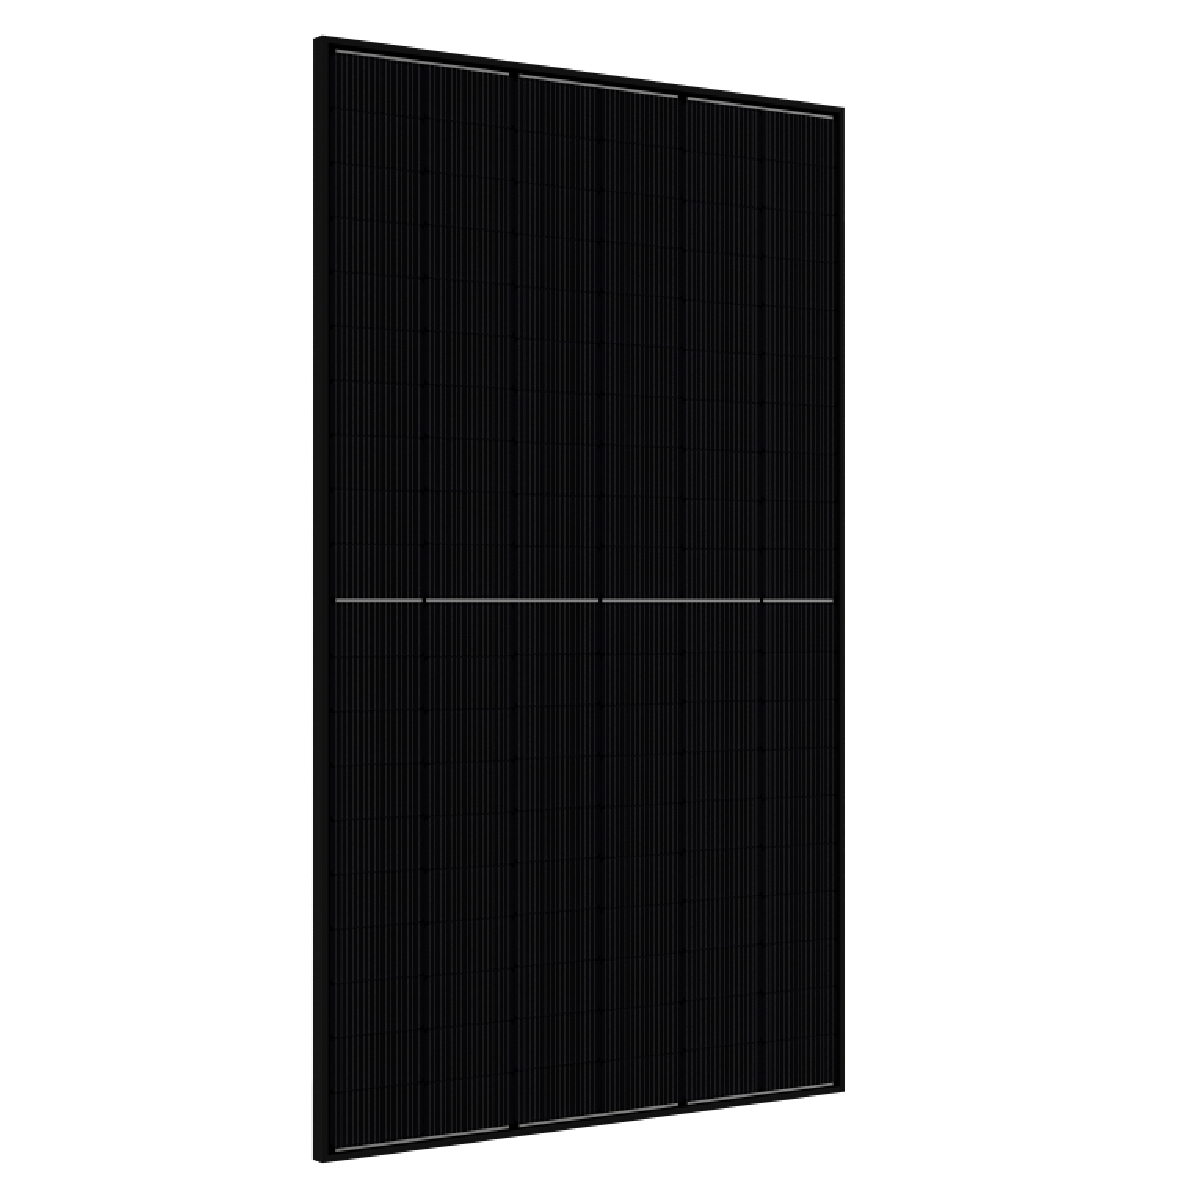 TommaTech 470Wp 120TNFB M10 TopCon Dark Series Solar Panel